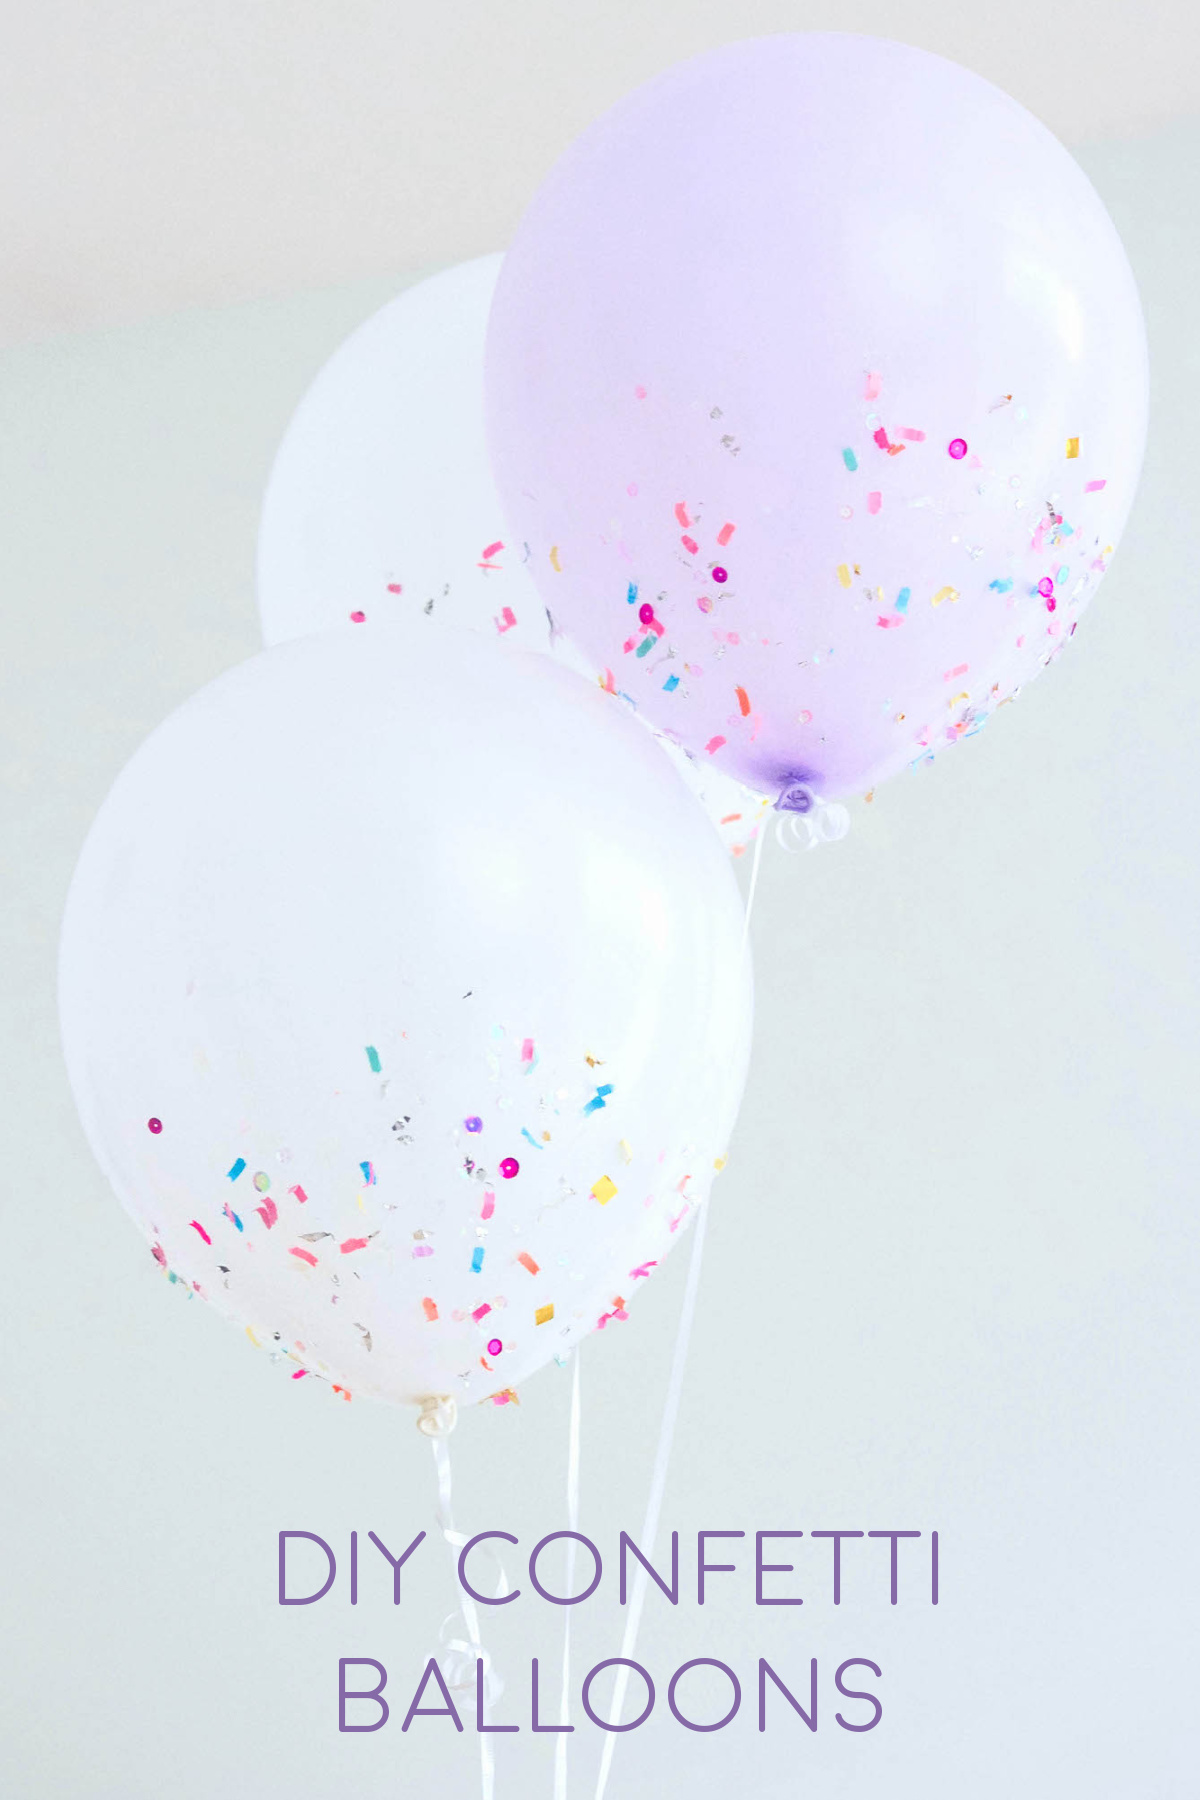 DIY confetti balloons